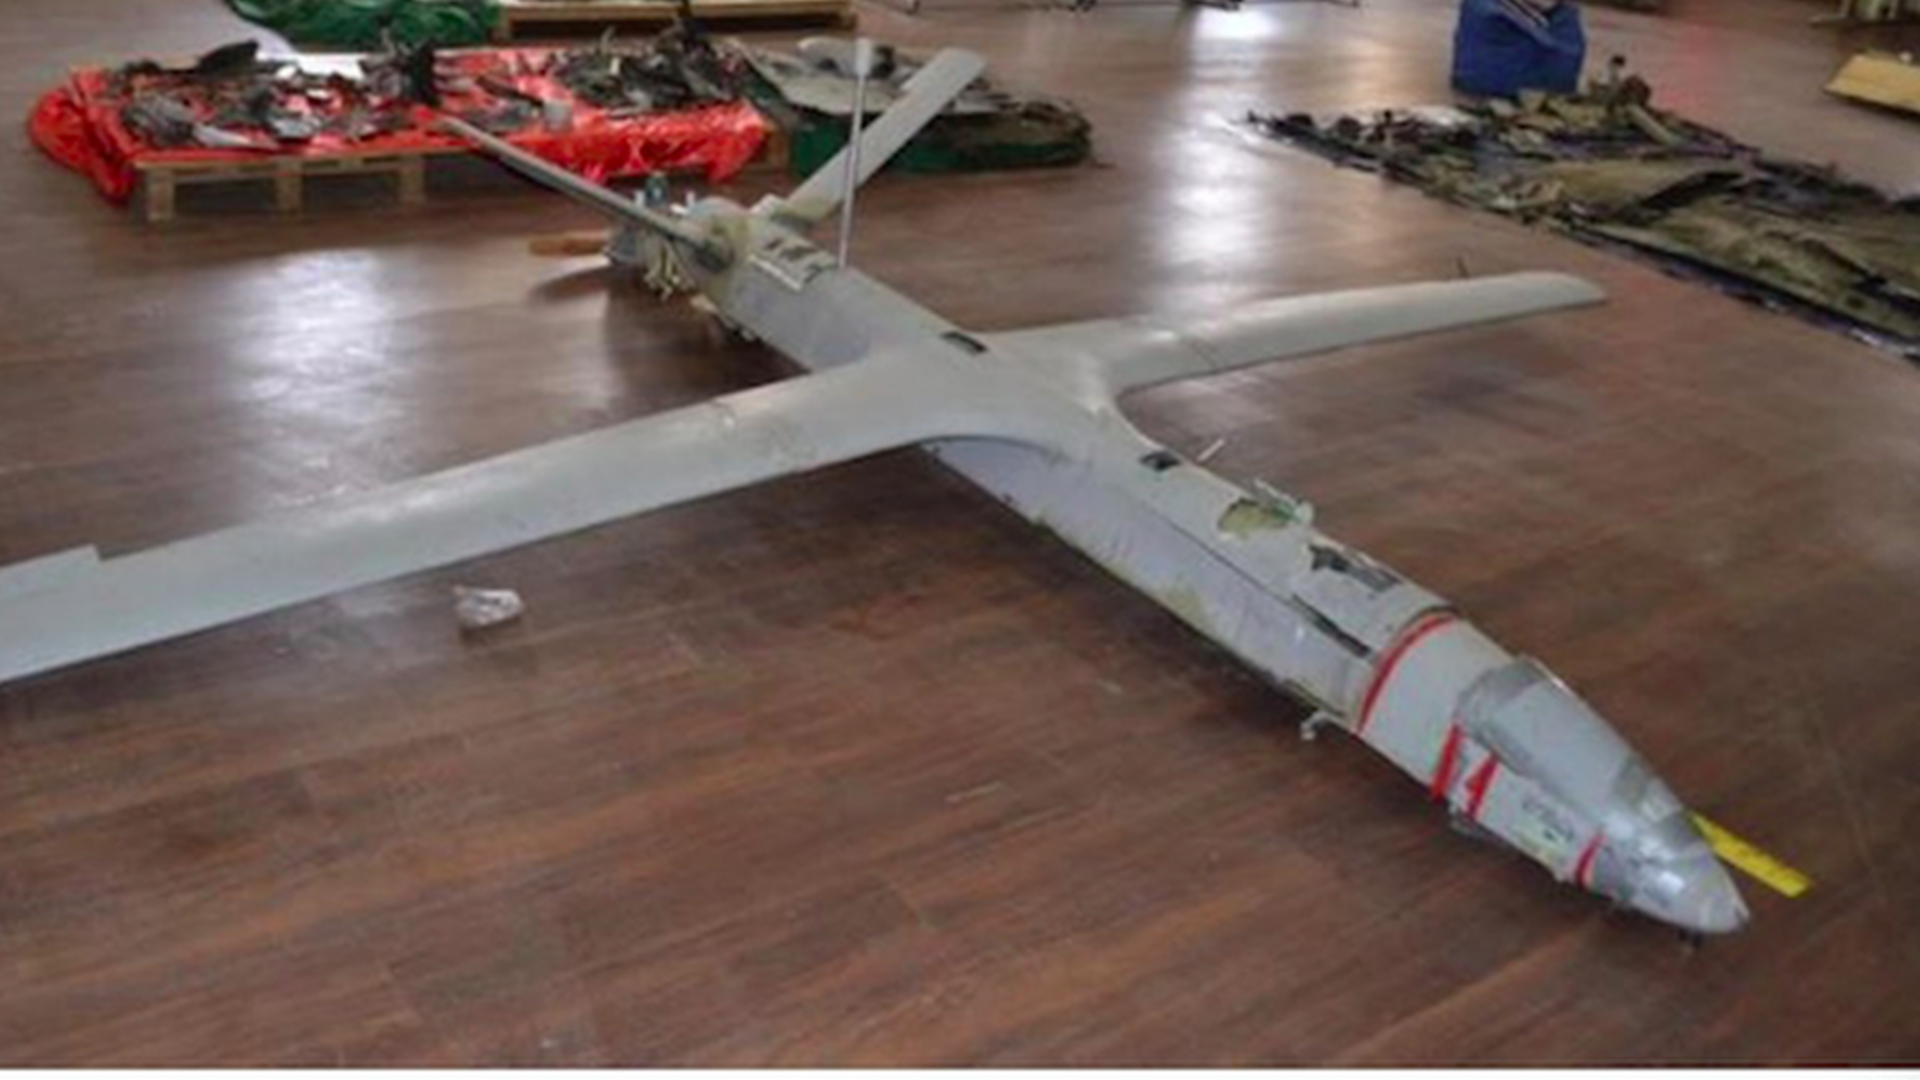 Drones and the attacks on Aramco facilities in Saudi Arabia